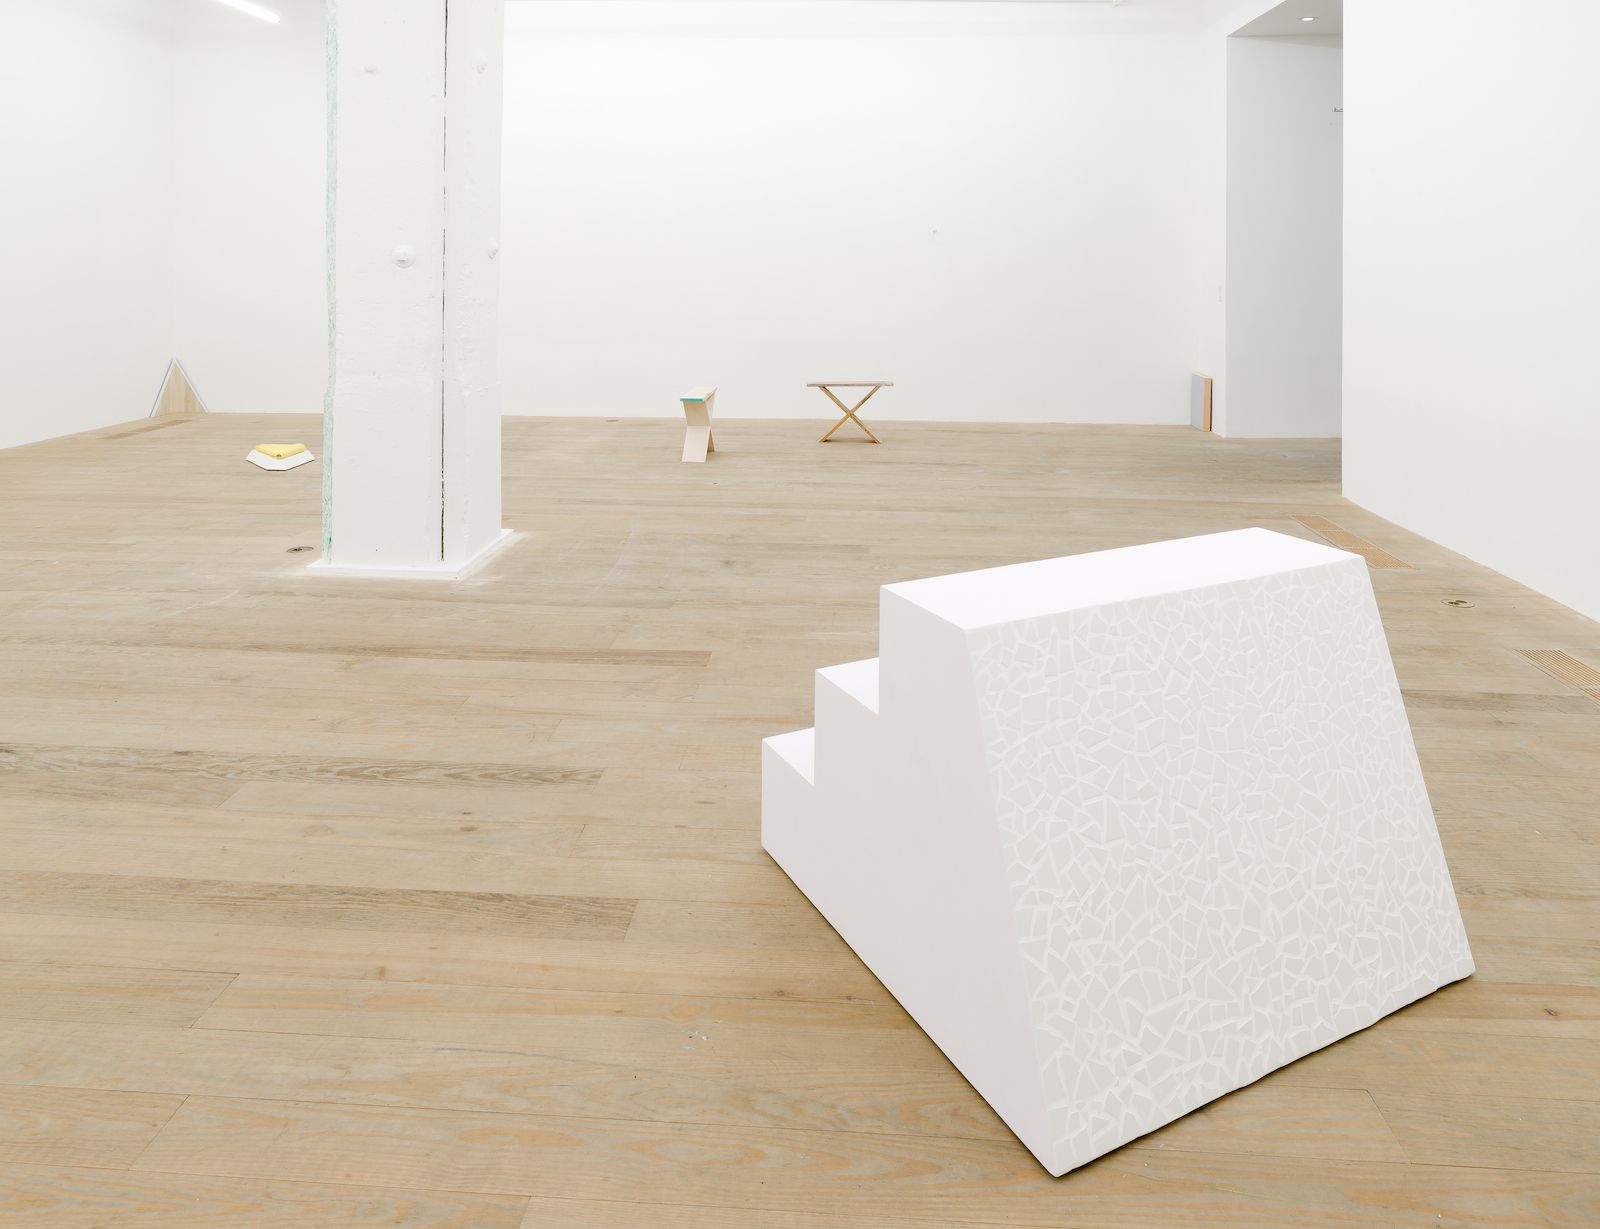 Gordon Hall, 2014, installation view, Foxy Production, New York